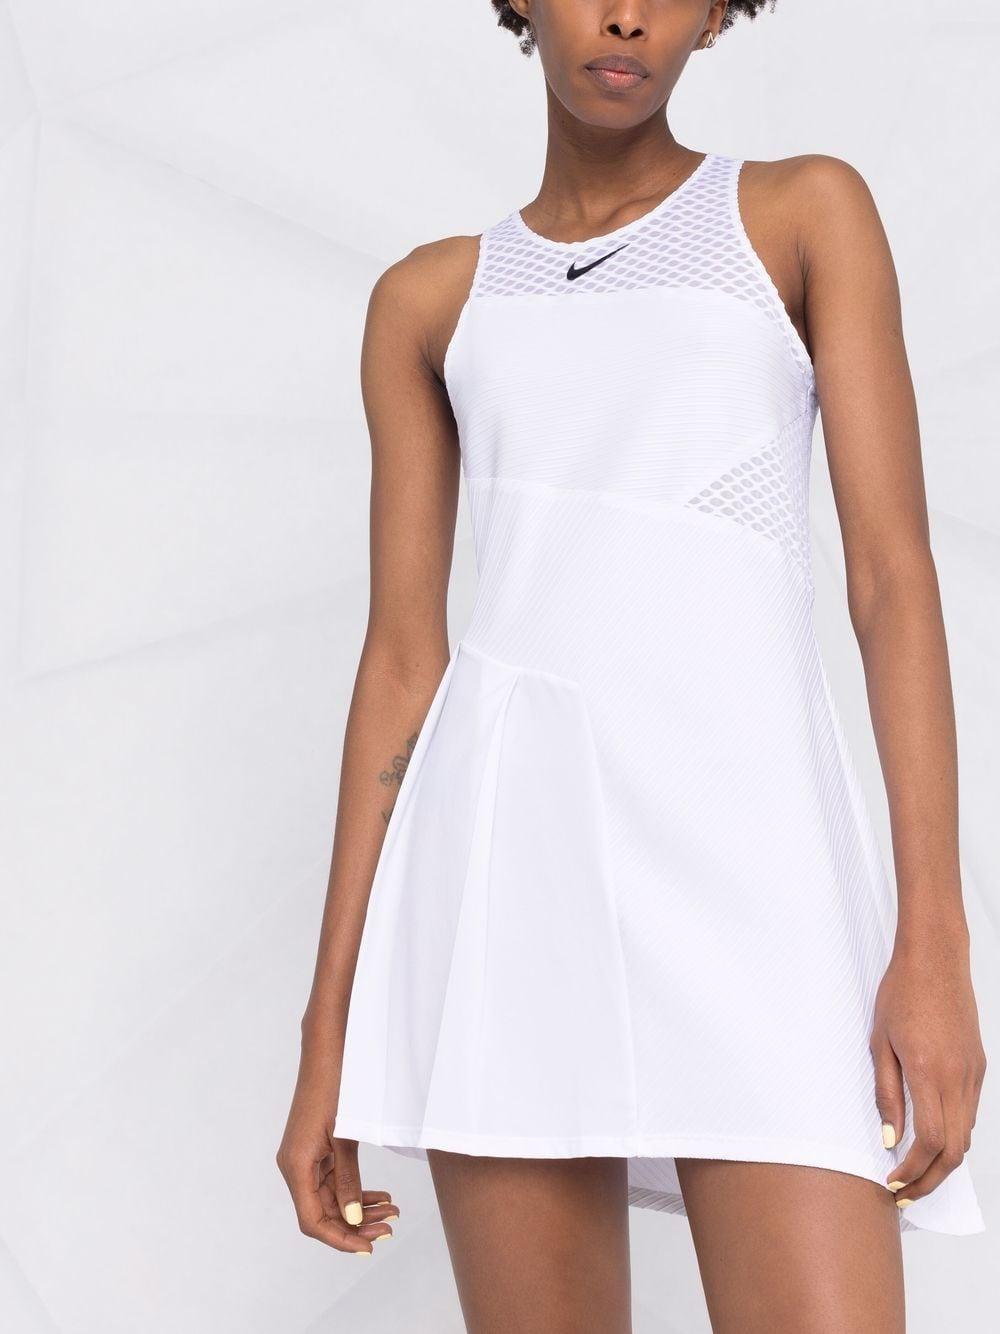 Nike Synthetic Dri-fit Adv Slam Tennis Dress in White | Lyst Canada